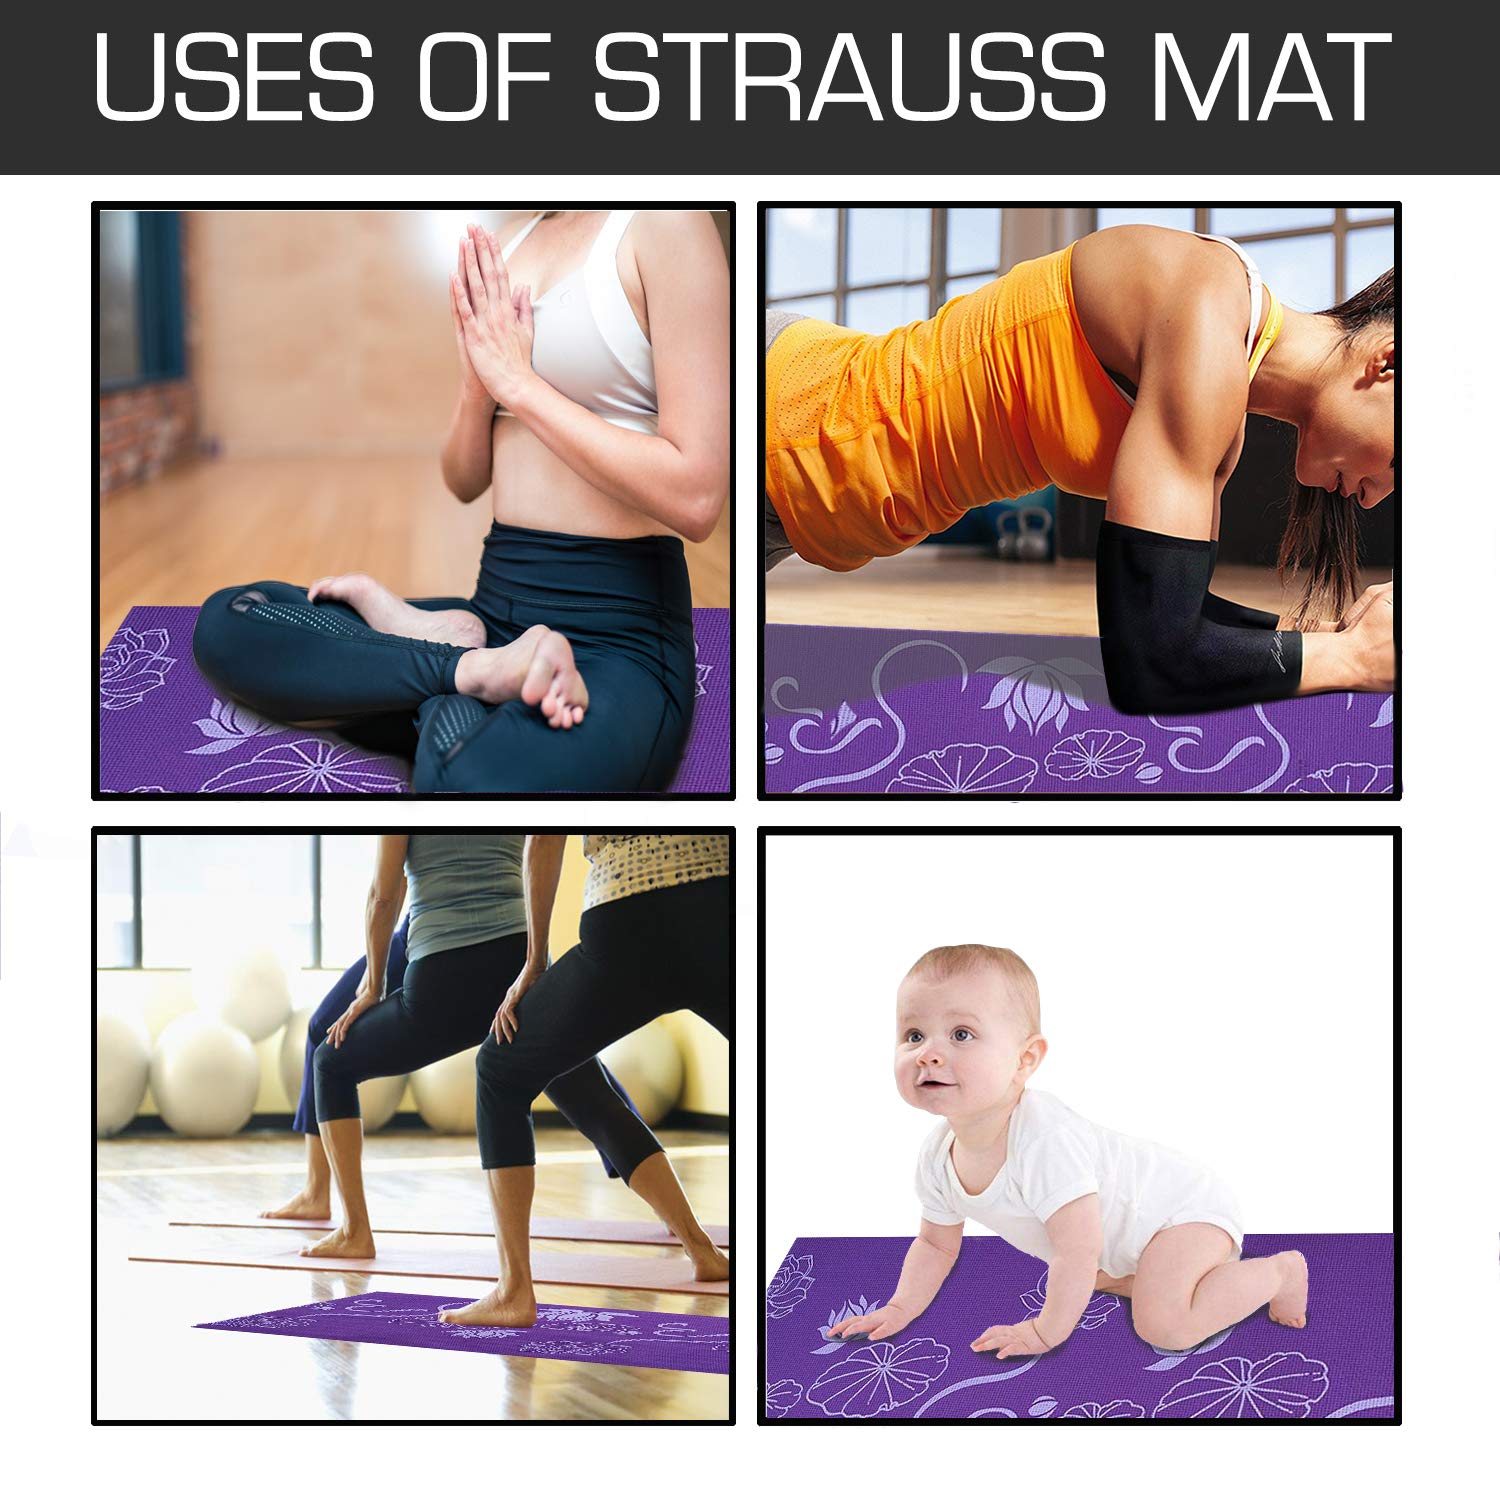 Strauss Yoga Mat 6mm (Floral), Yoga Block (Purple) Pair and Yoga Belt (Blue)